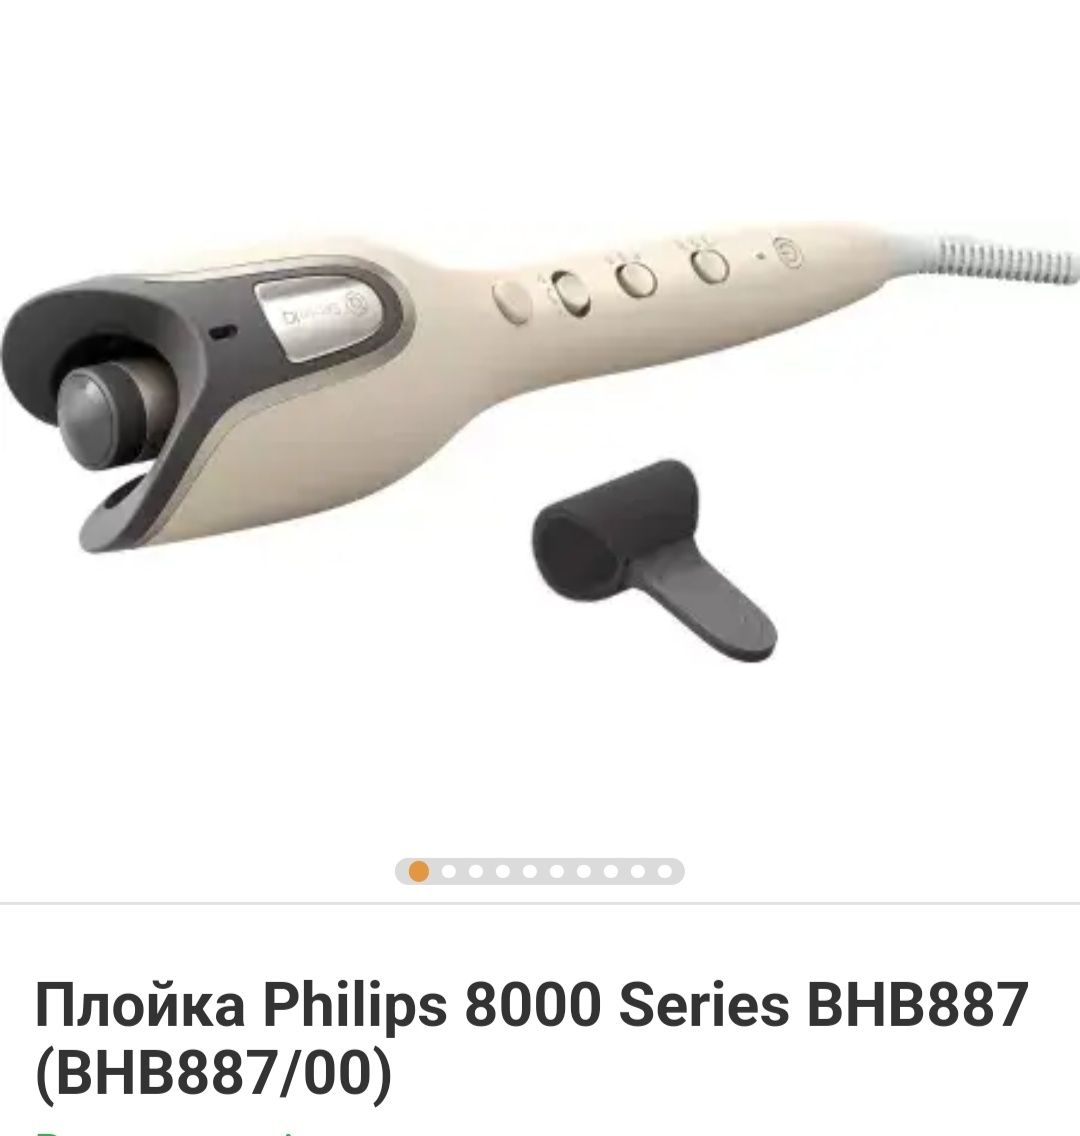 Philips 8000 series